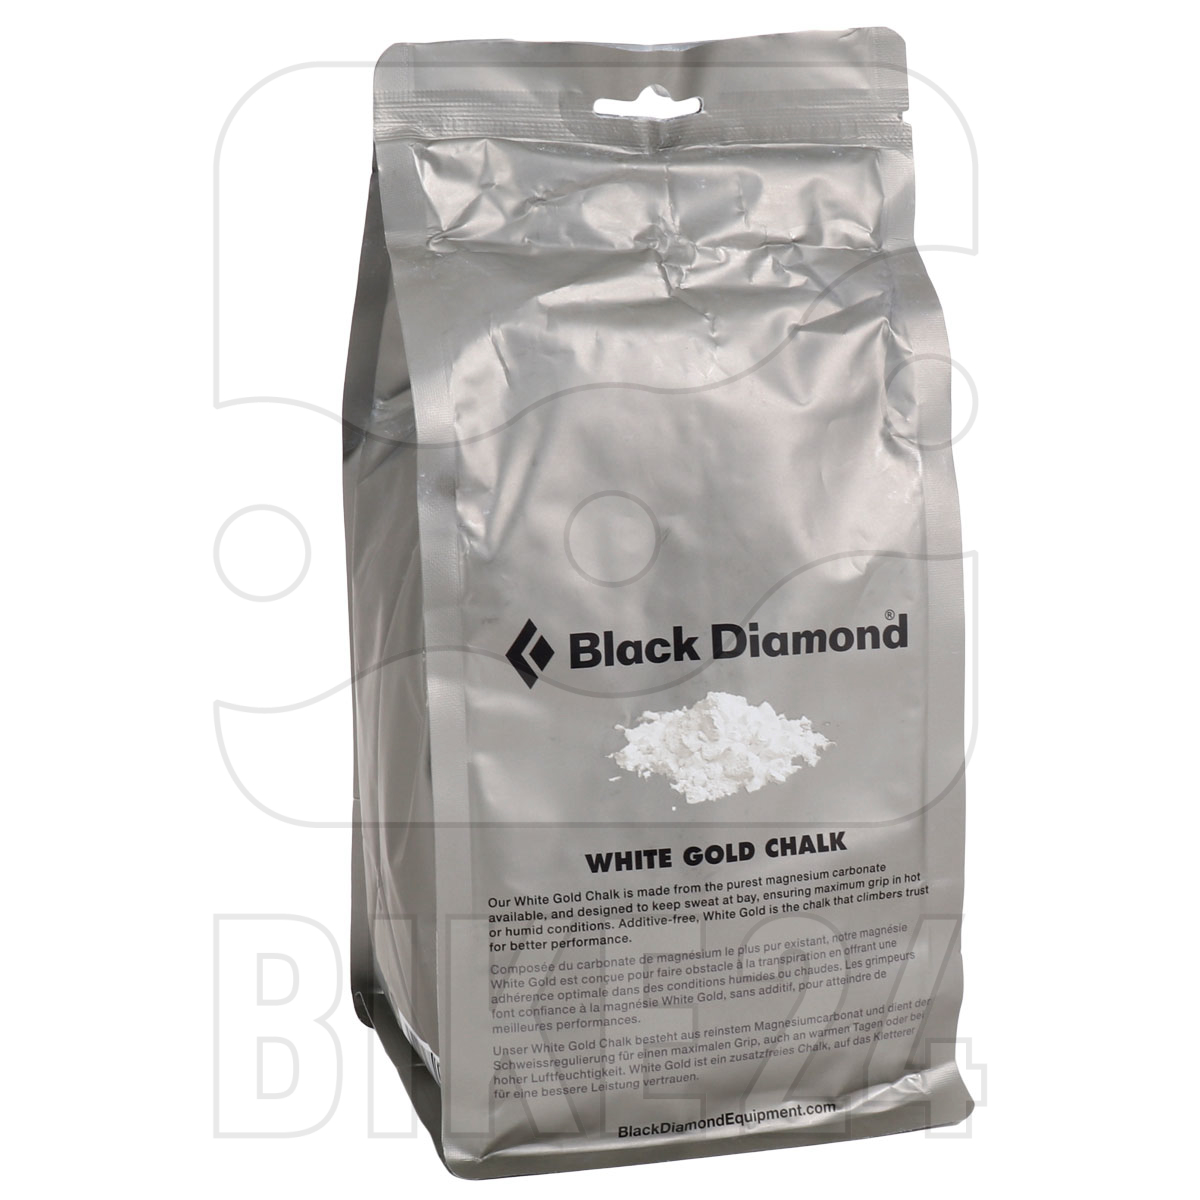 Productfoto van Black Diamond Loose Chalk 300g